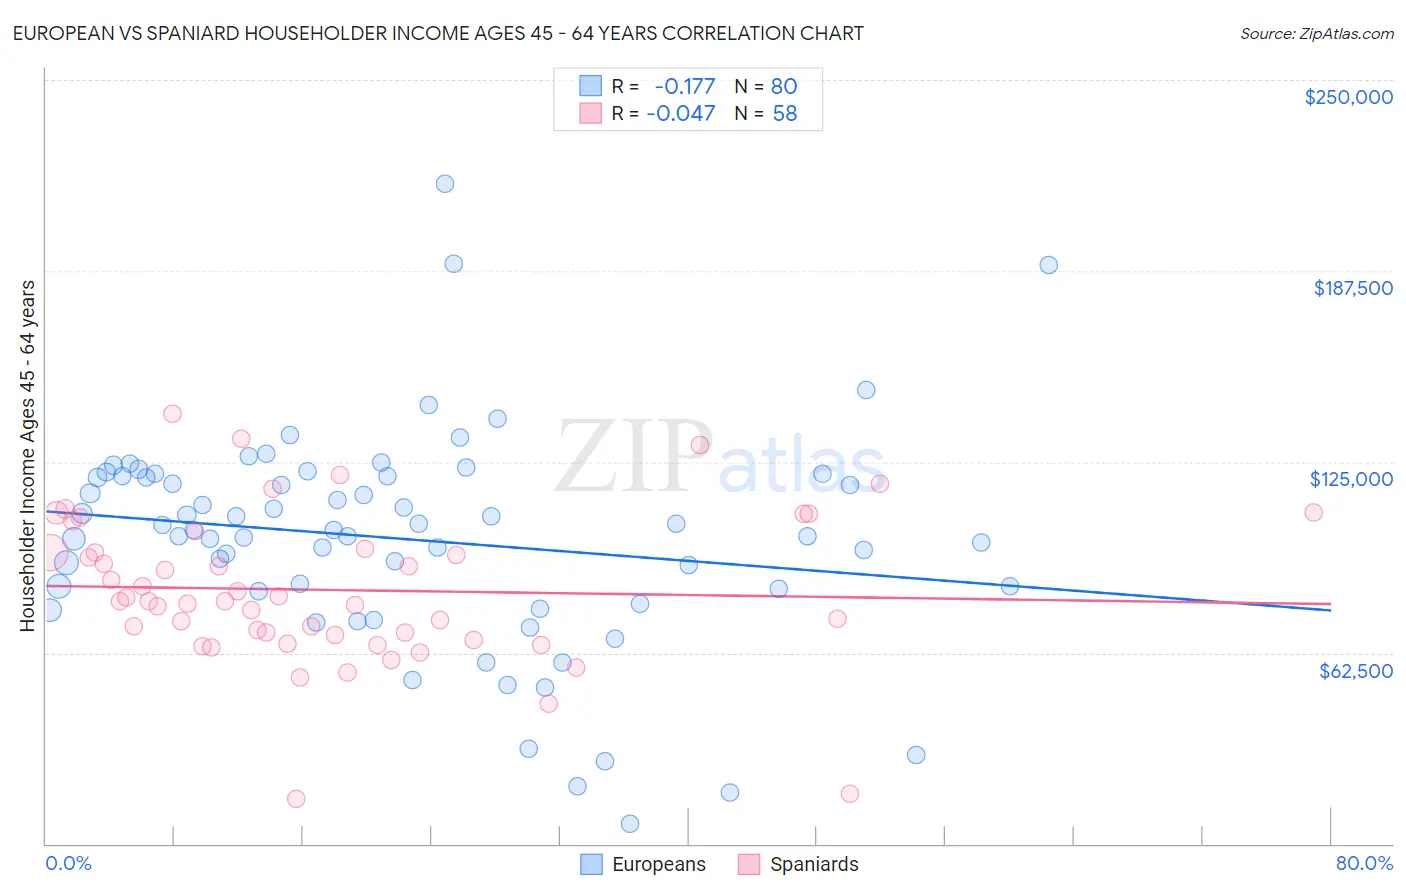 European vs Spaniard Householder Income Ages 45 - 64 years